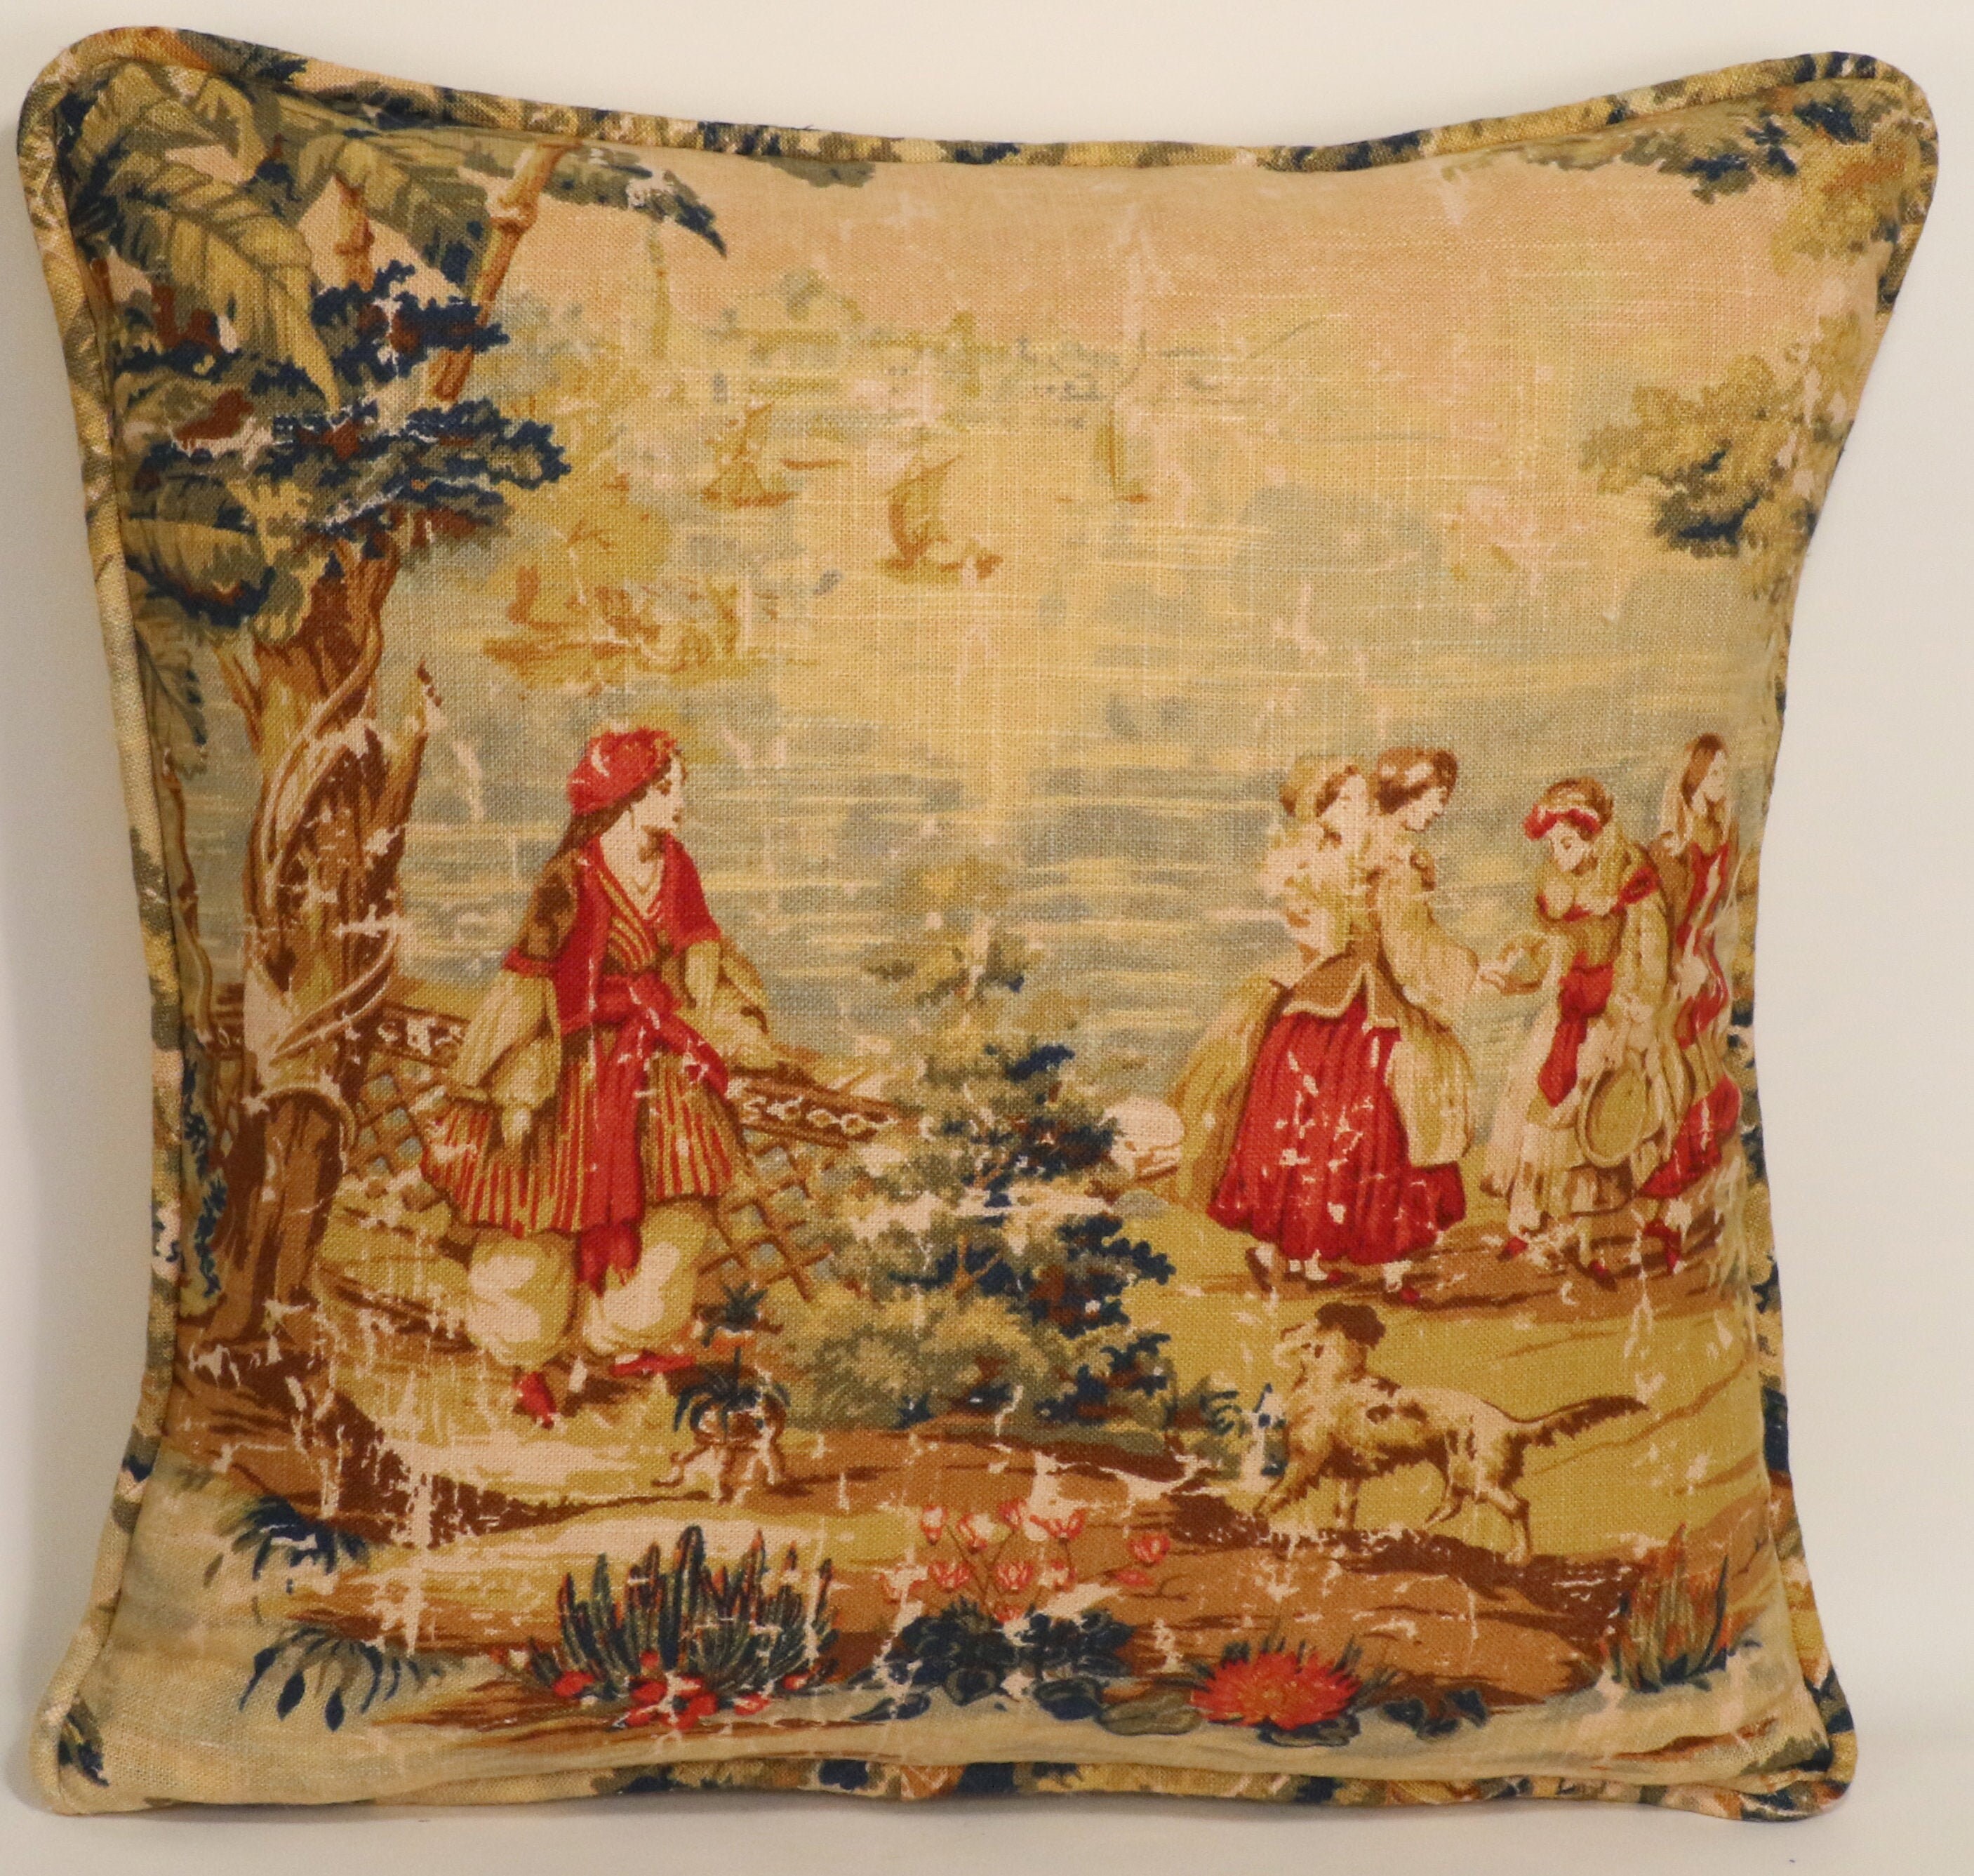 Renaissance Monogram Decorative Pillow * CUSTOMIZABLE *